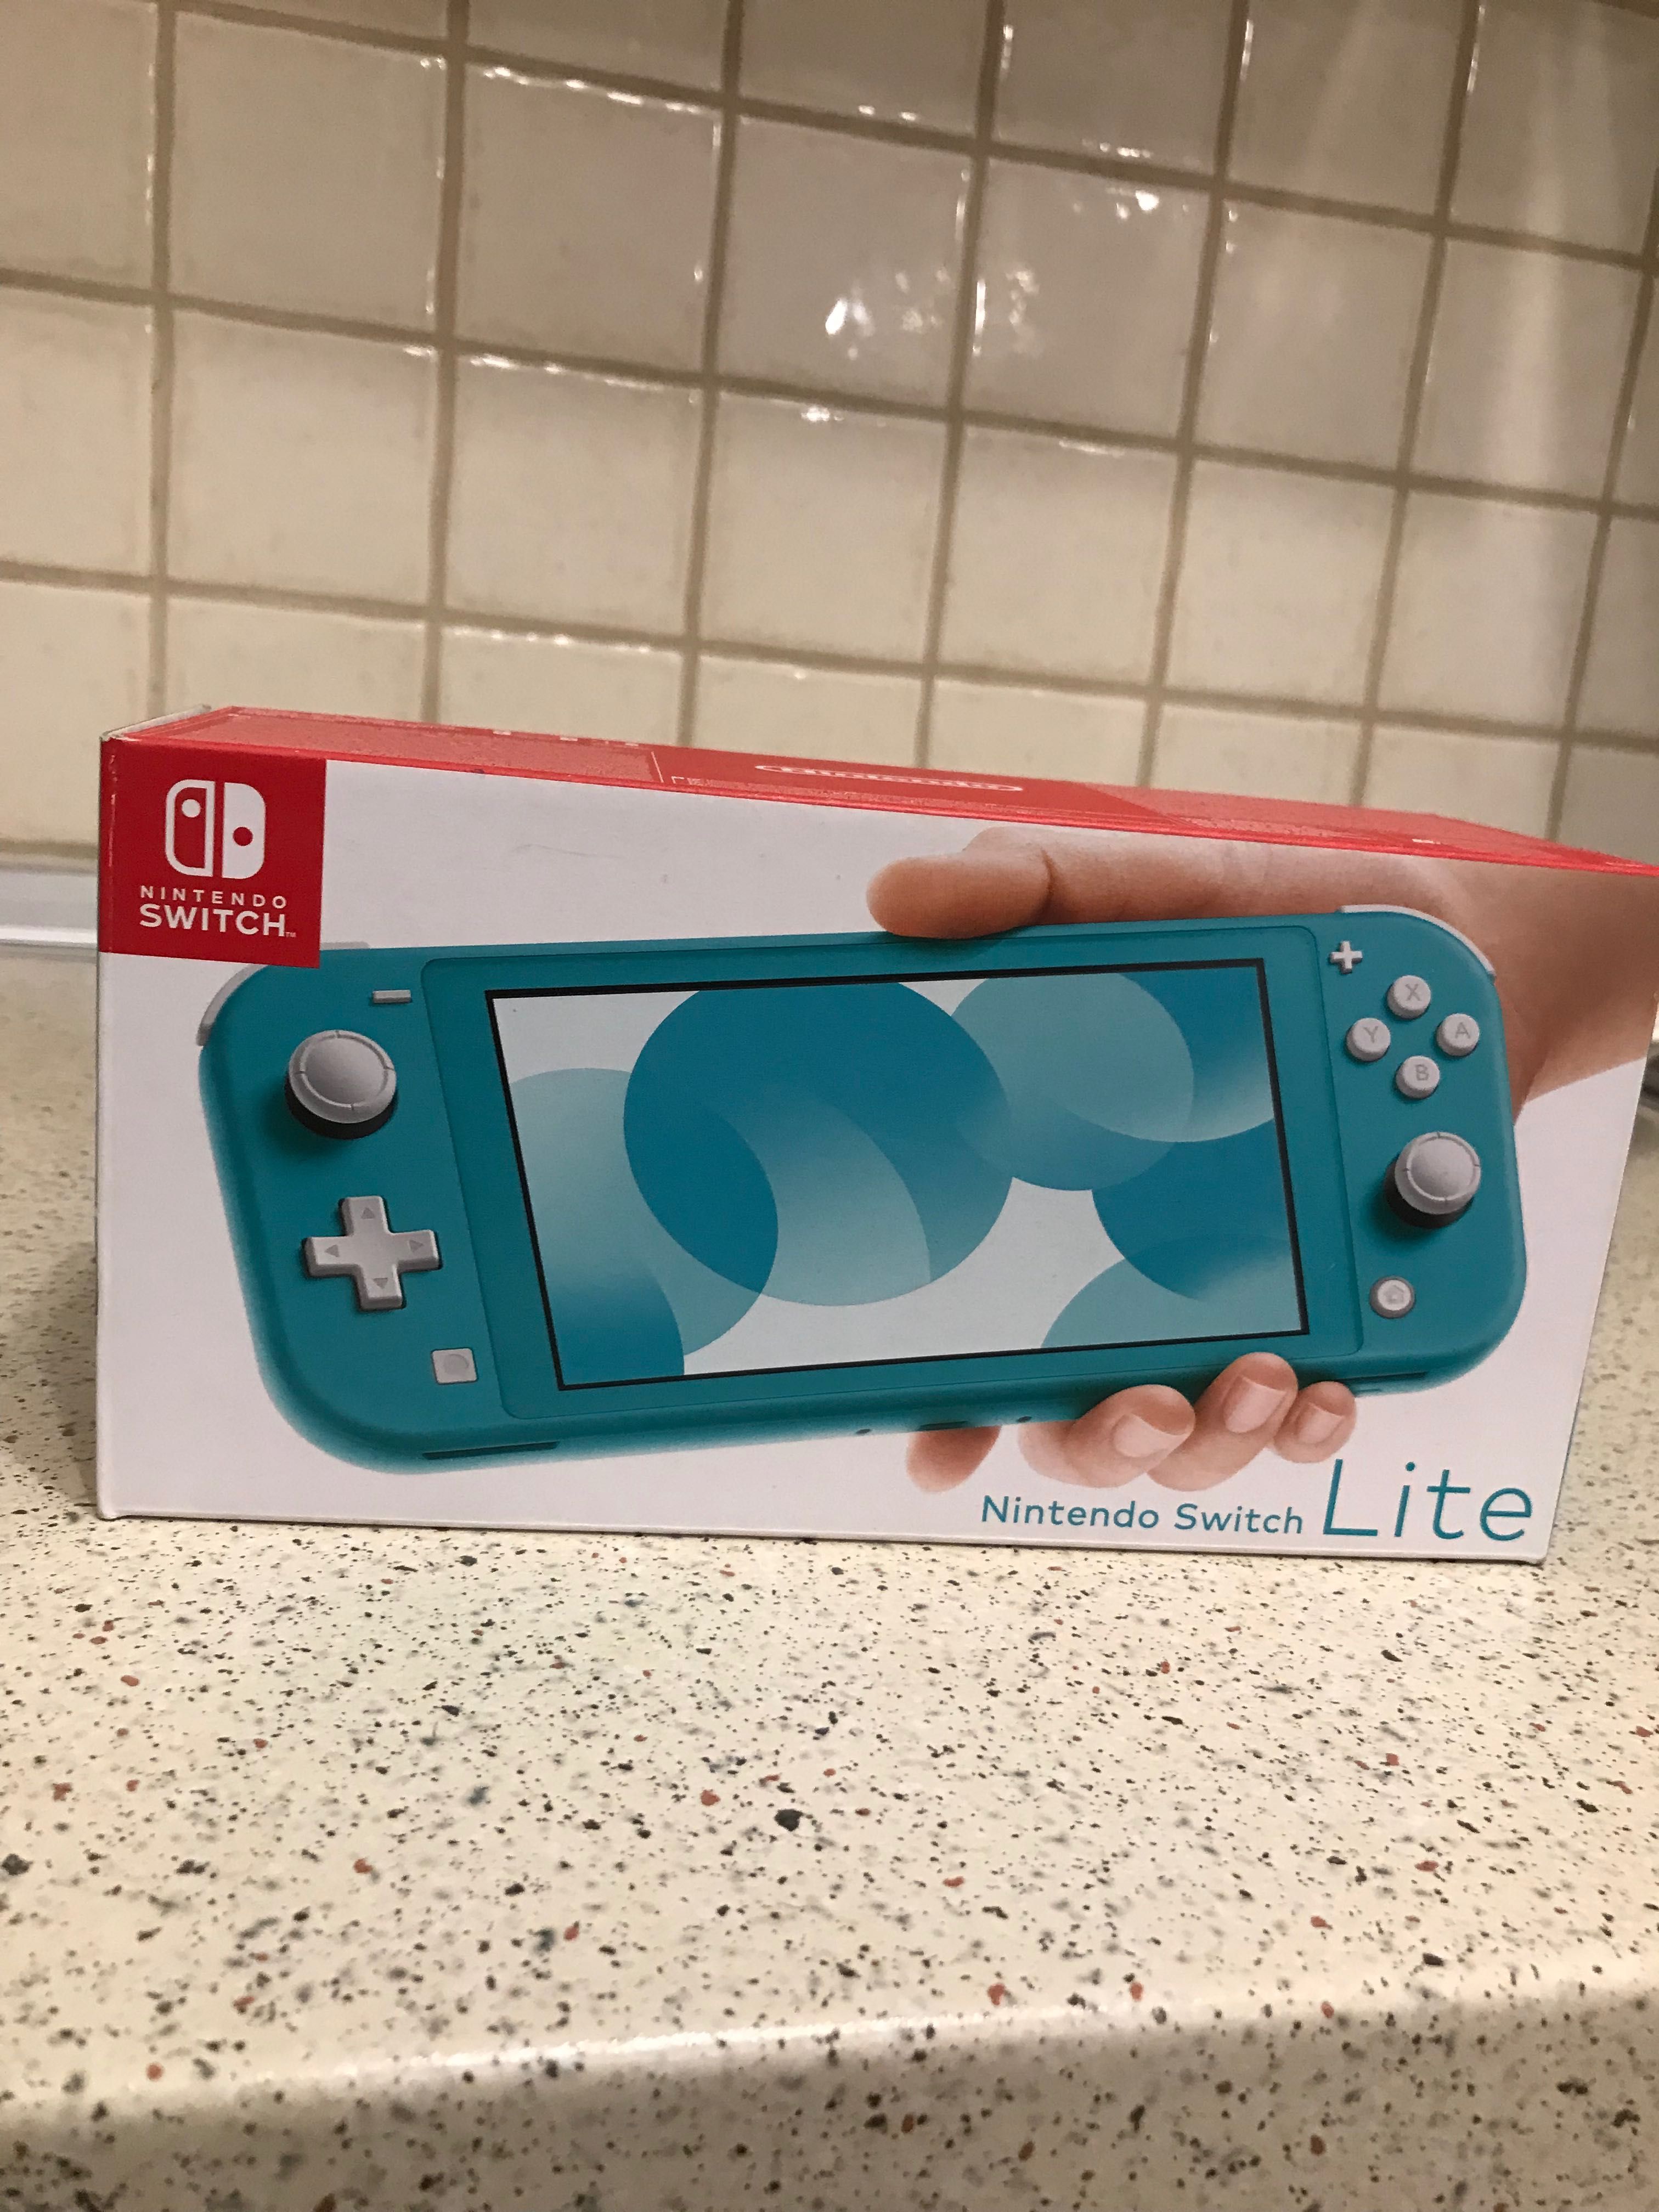 Nintendo Switch Lite
Тюркоаз